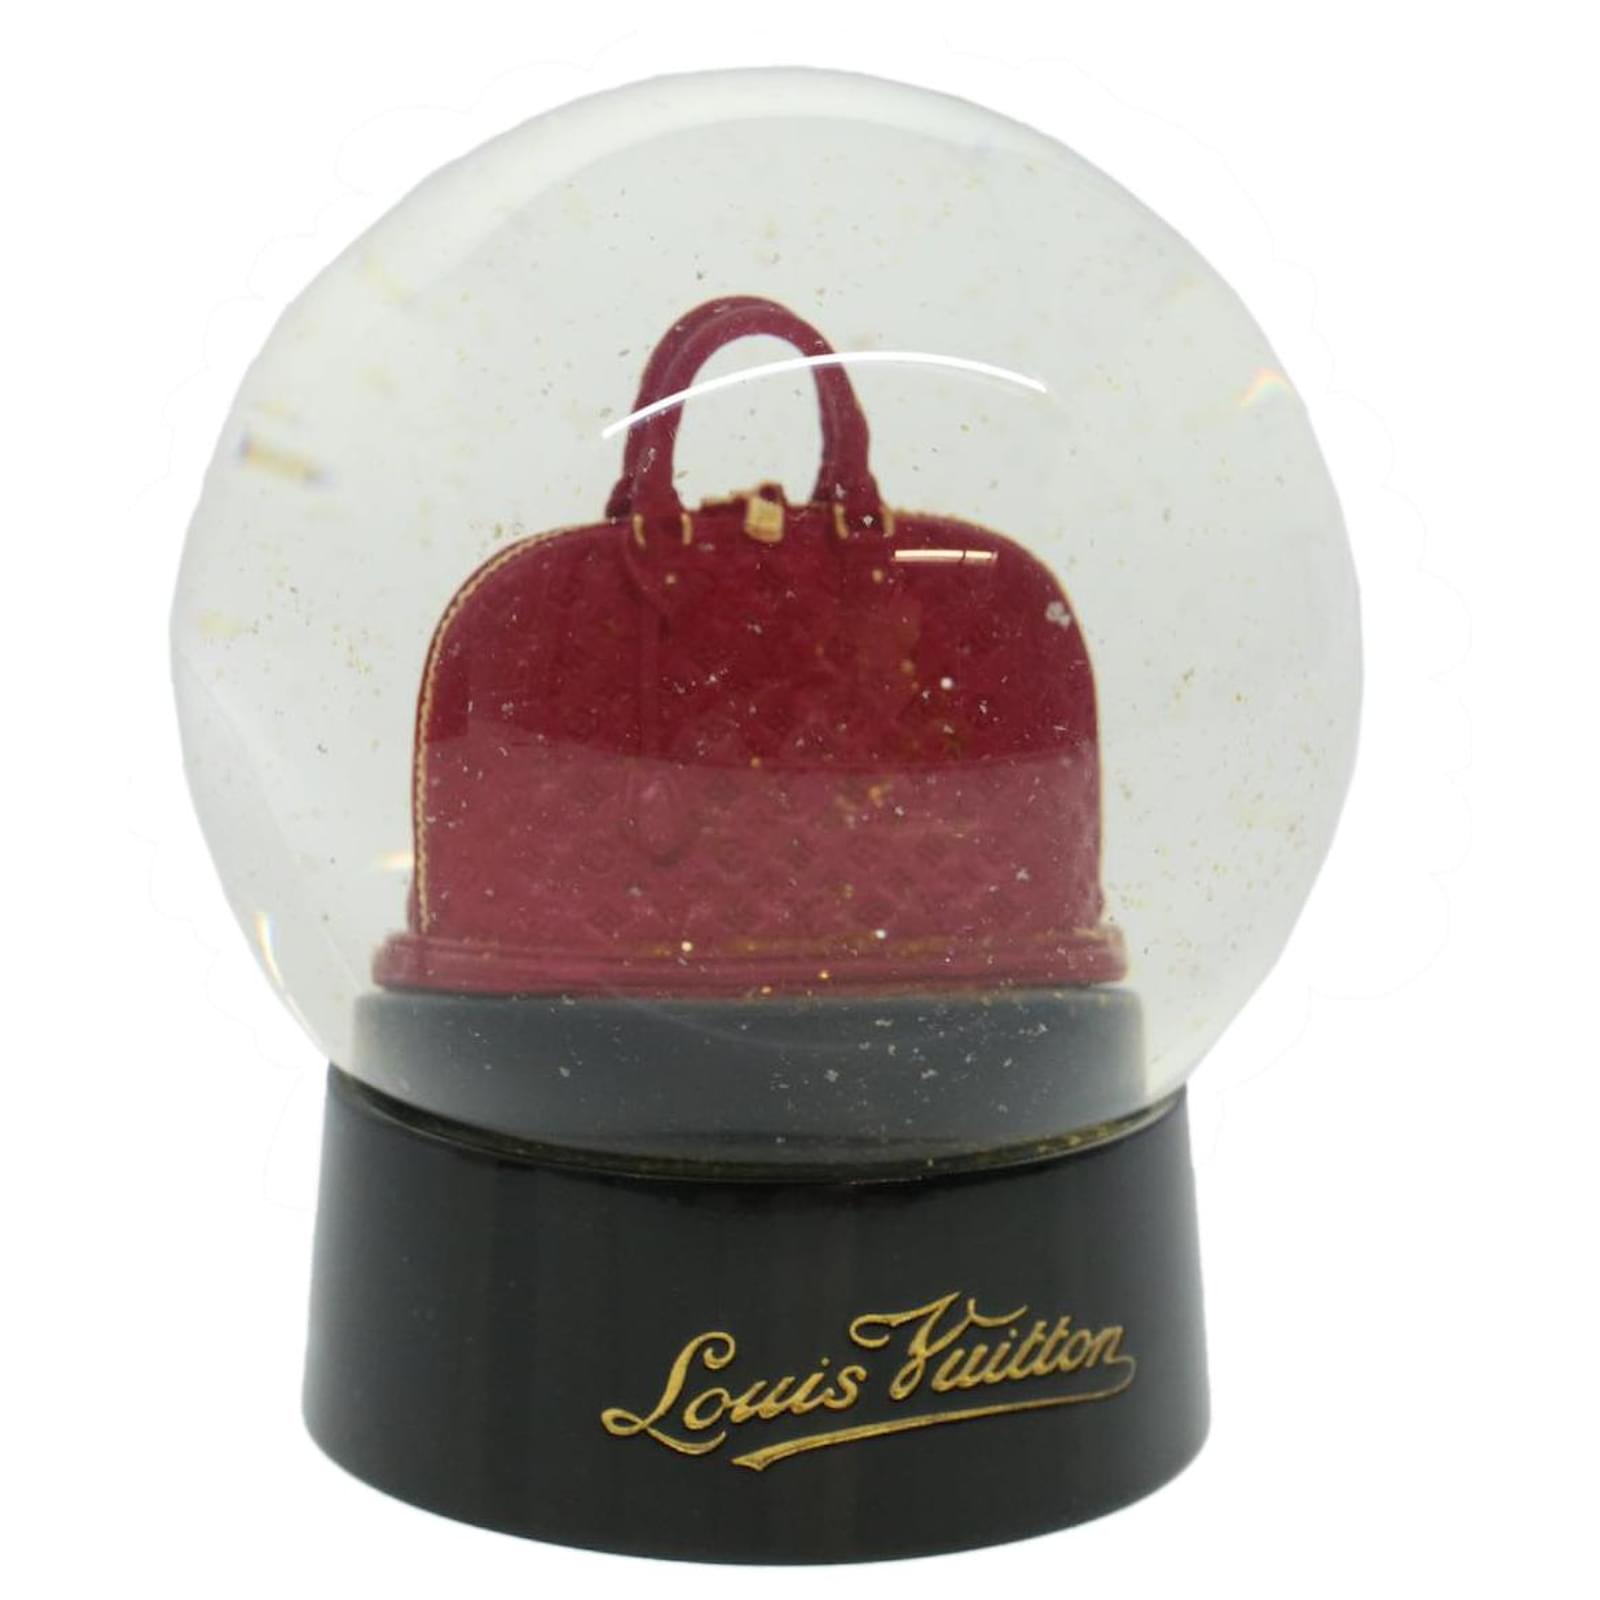 Louis Vuitton Snow Globe, Louis Vuitton Snow Dome, Louis Vuitton Globe